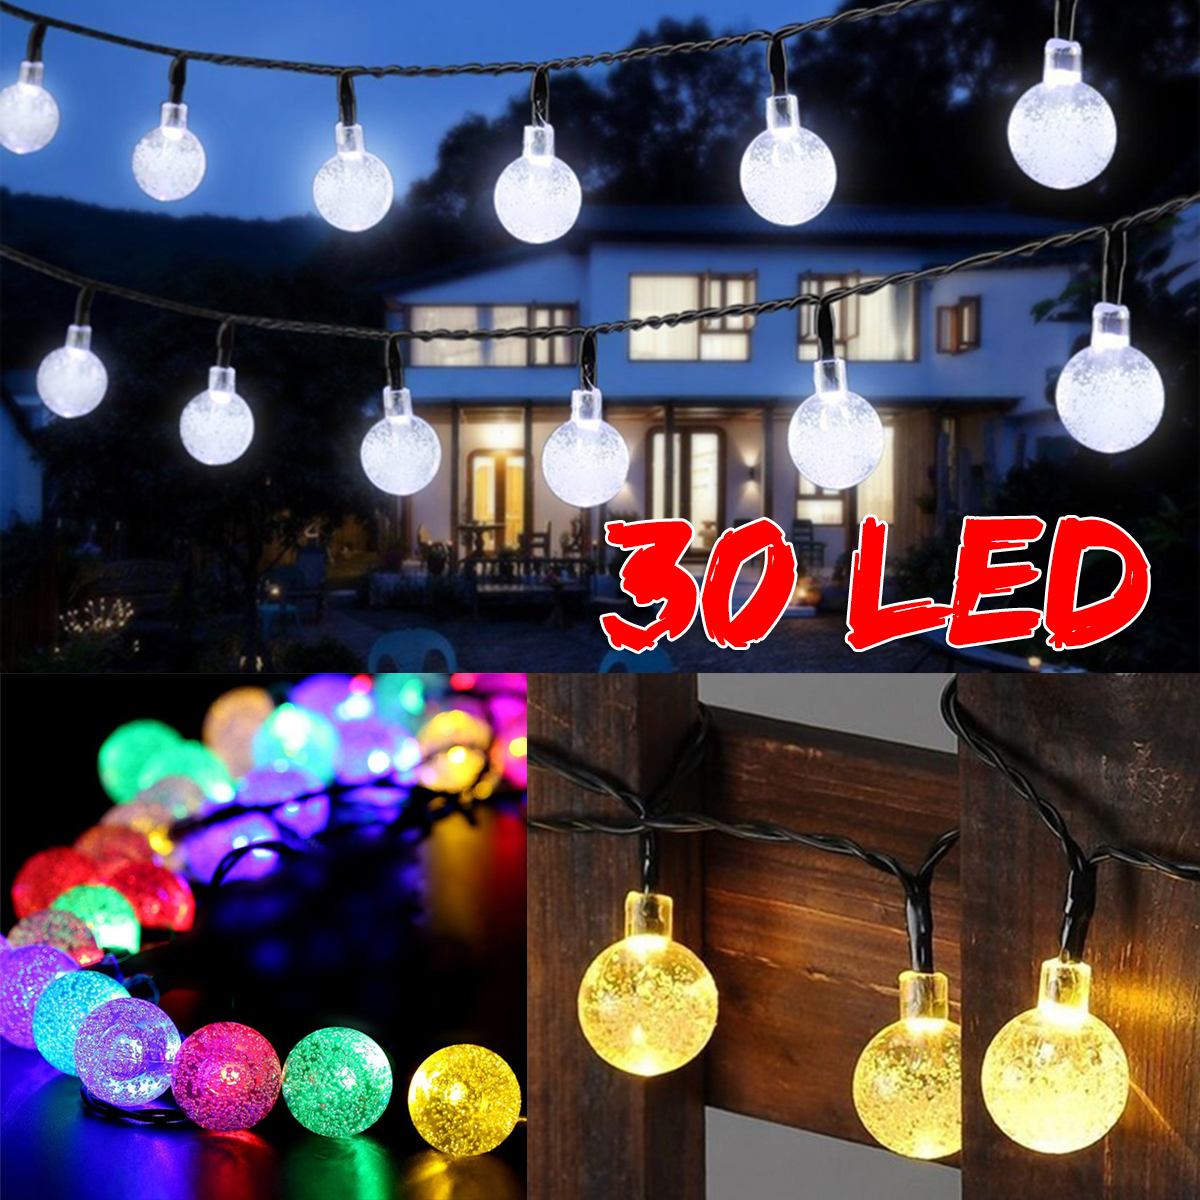 30-LED-Solar-Power-Christmas-Fairy-String-Light-Party-Outdoor-Patio-Decor-Lamp-1353028-1